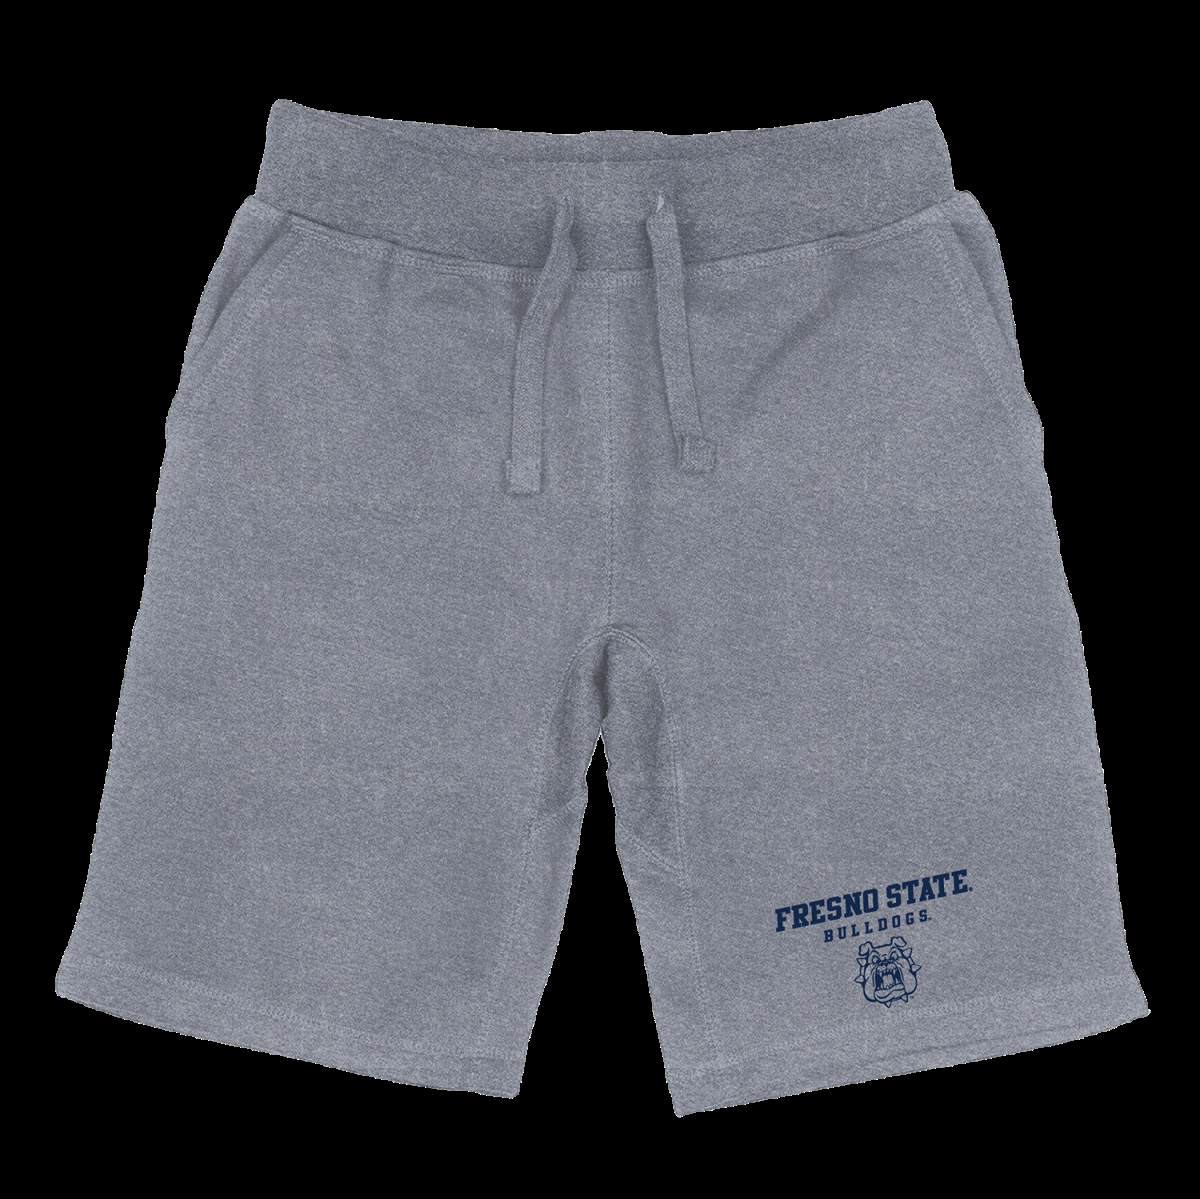 570-169-HGY-02 California State University, Fresno Bulldogs Seal Shorts, Heather Grey - Medium -  W Republic